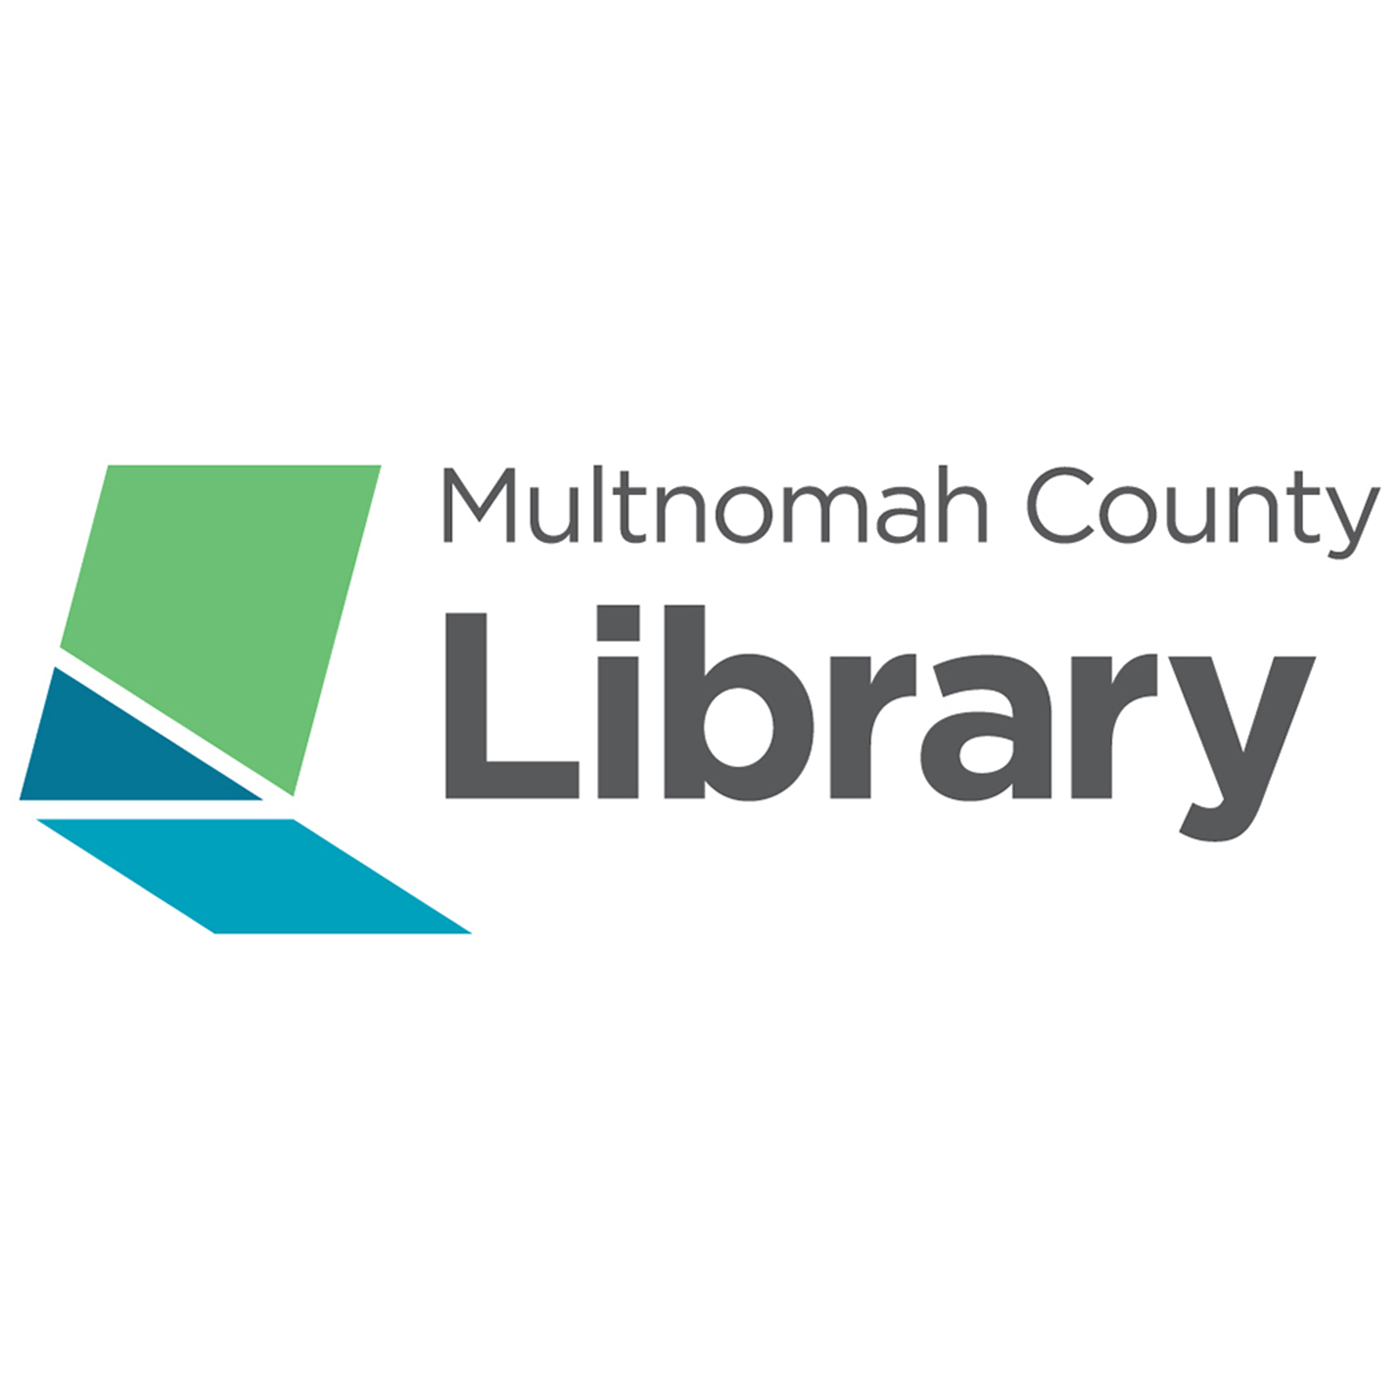 Multnomah County Library logo